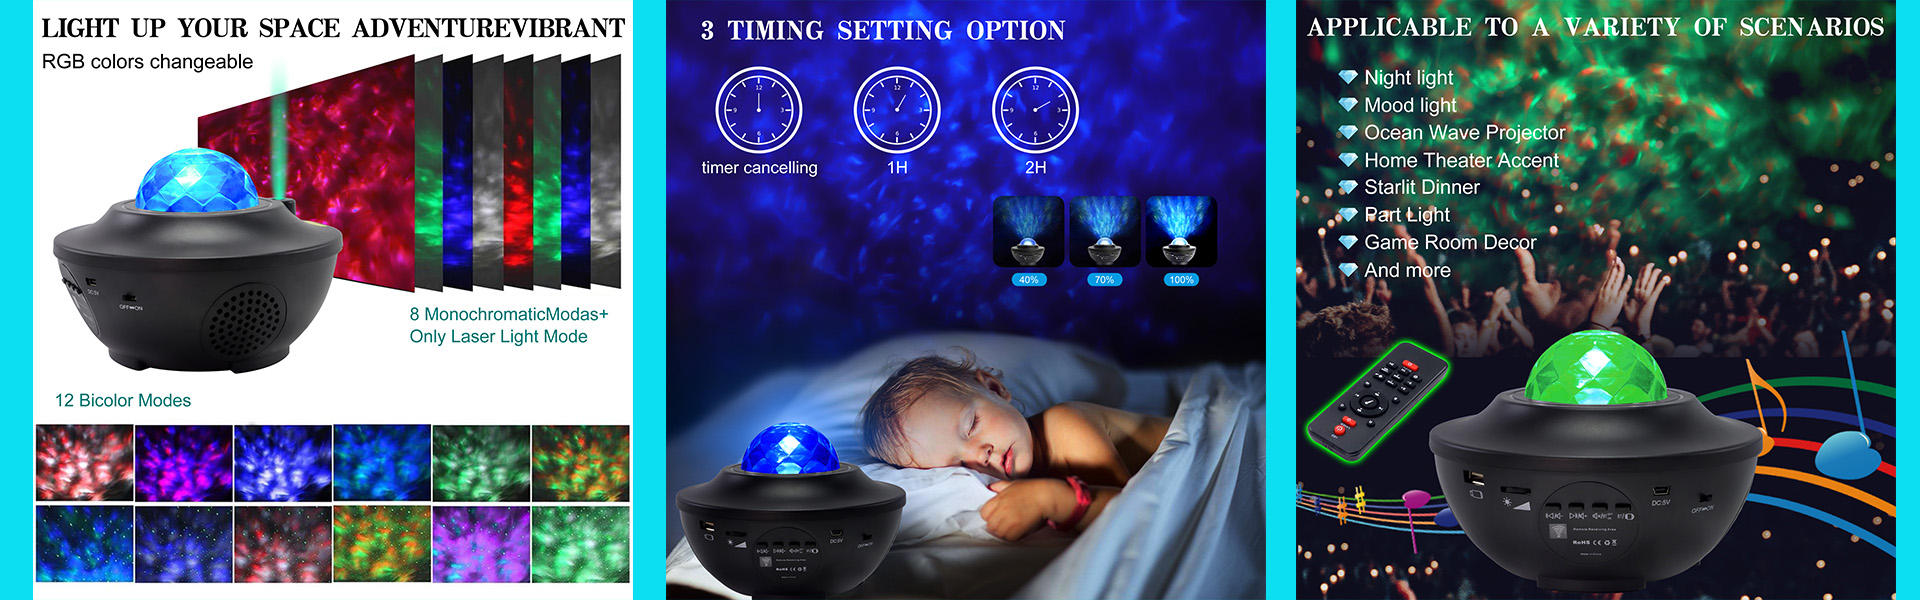 Copper String Light, Starry Projector, 3D Night Light,Xingan Xian Yixing Electronics Co., Ltd.